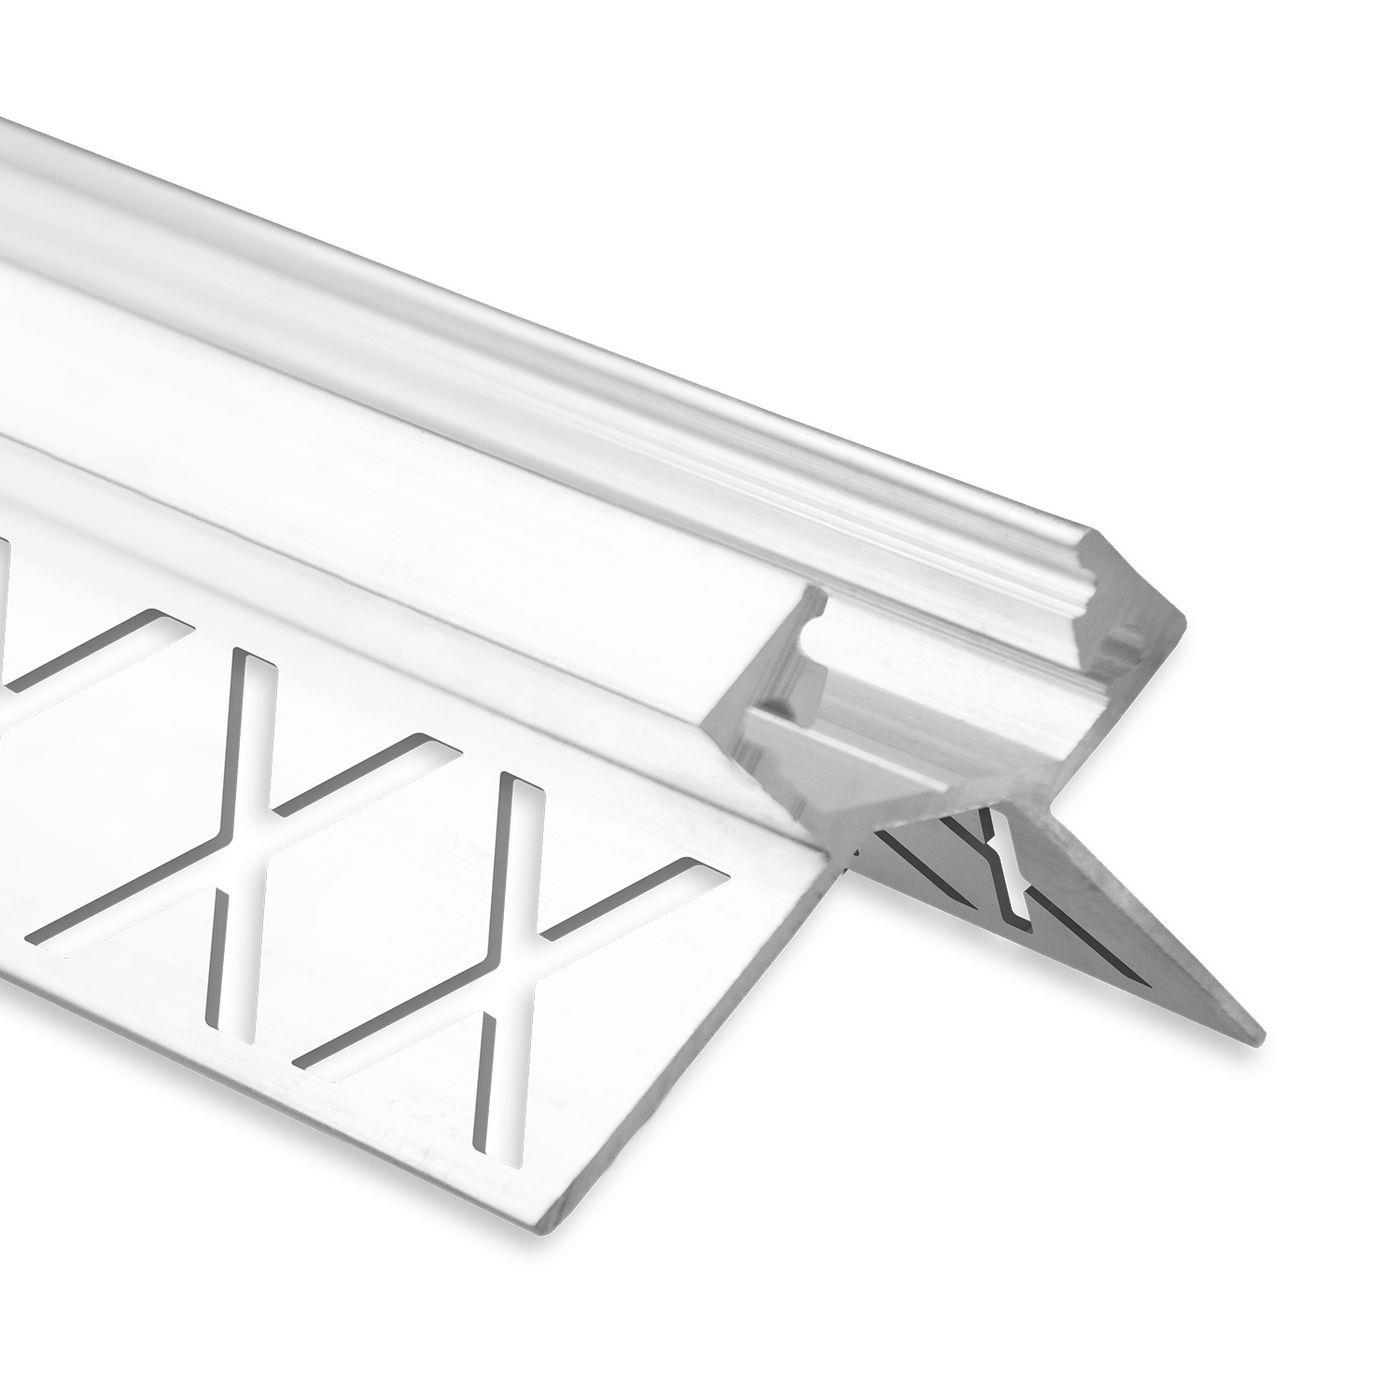 2m LED profile FP5 Silver 27,8x27,8mm Aluminium Tile profile for 12mm LED strips